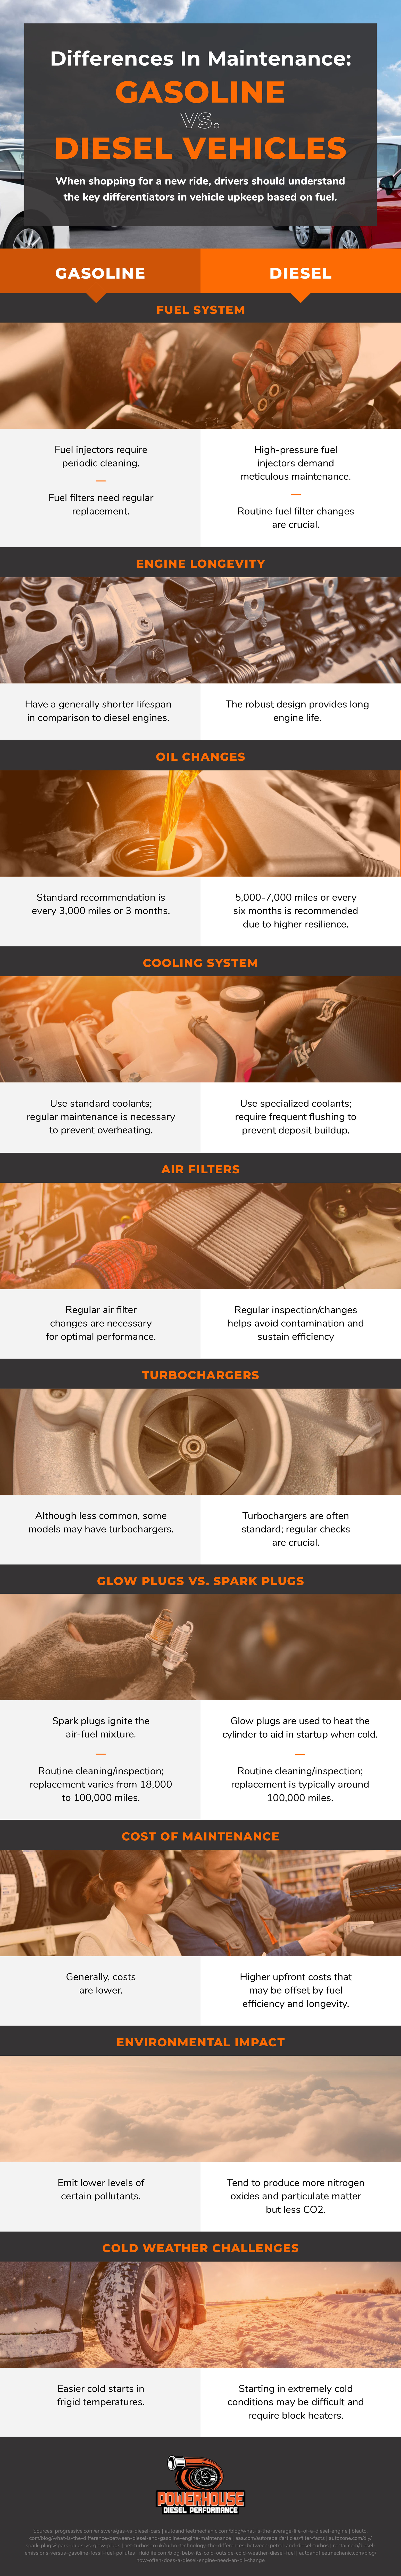 powerhouse diesel vehicle maintenance infographic